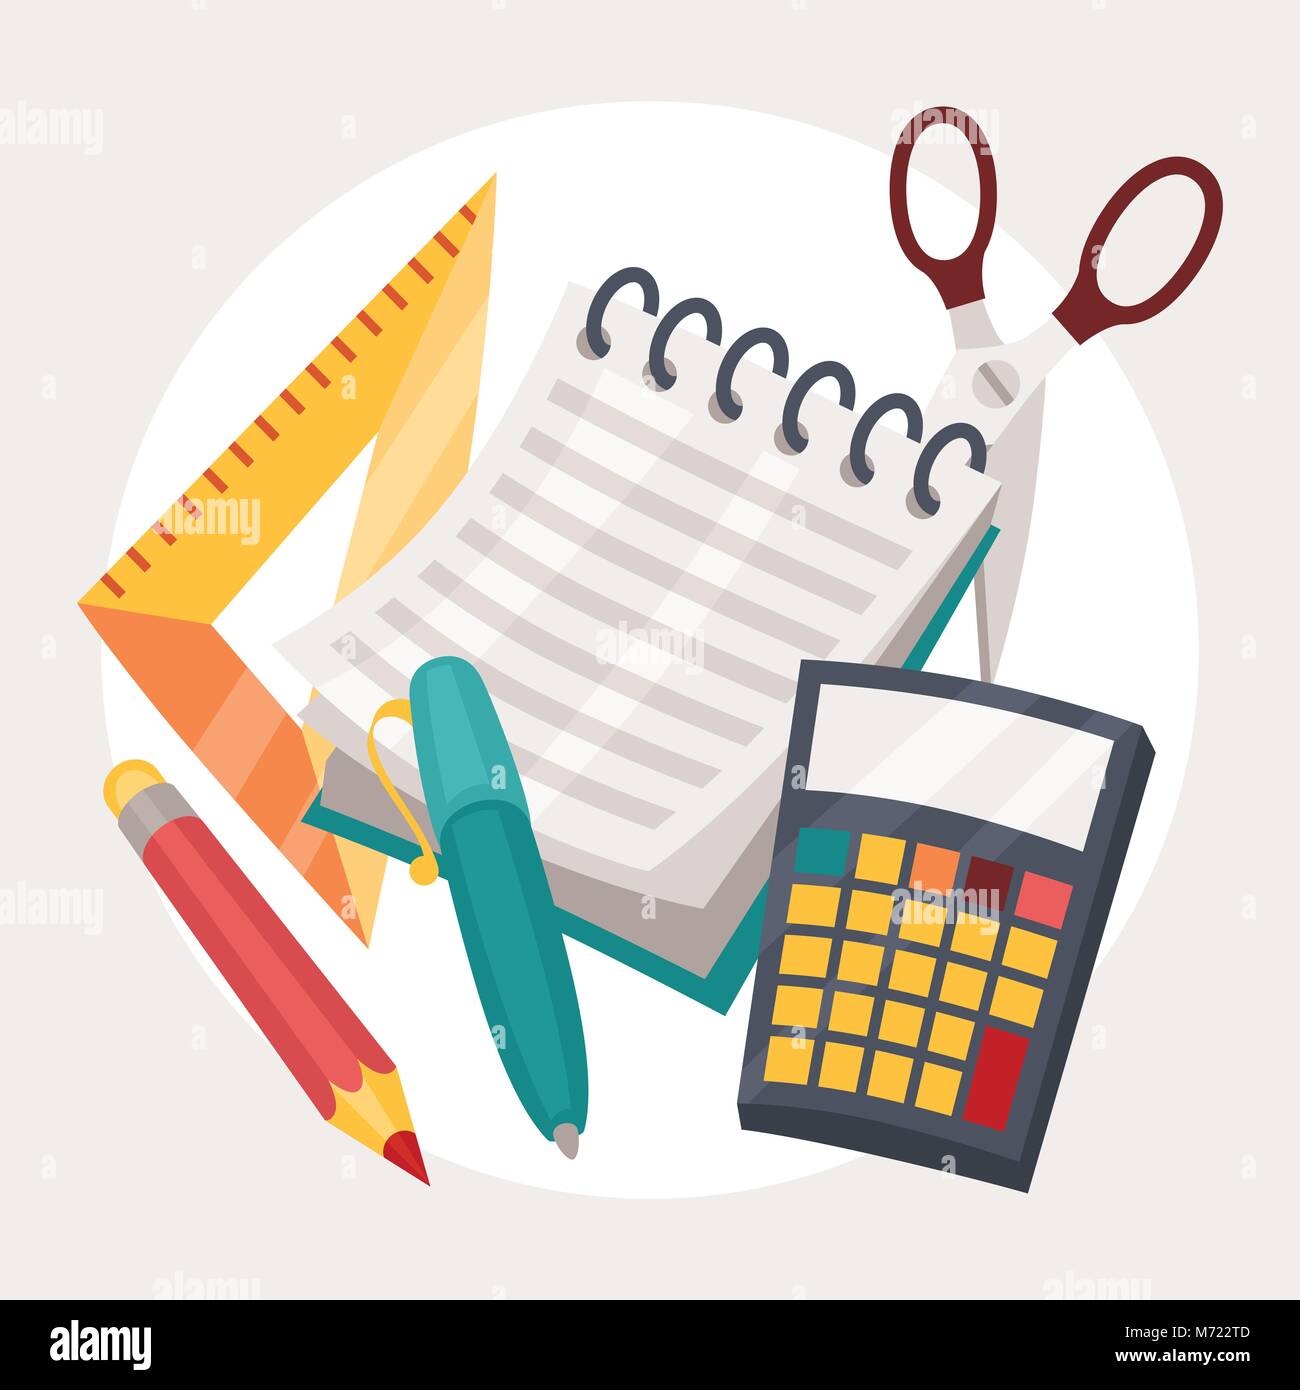 https://c8.alamy.com/comp/M722TD/education-illustration-design-of-school-supplies-icon-M722TD.jpg